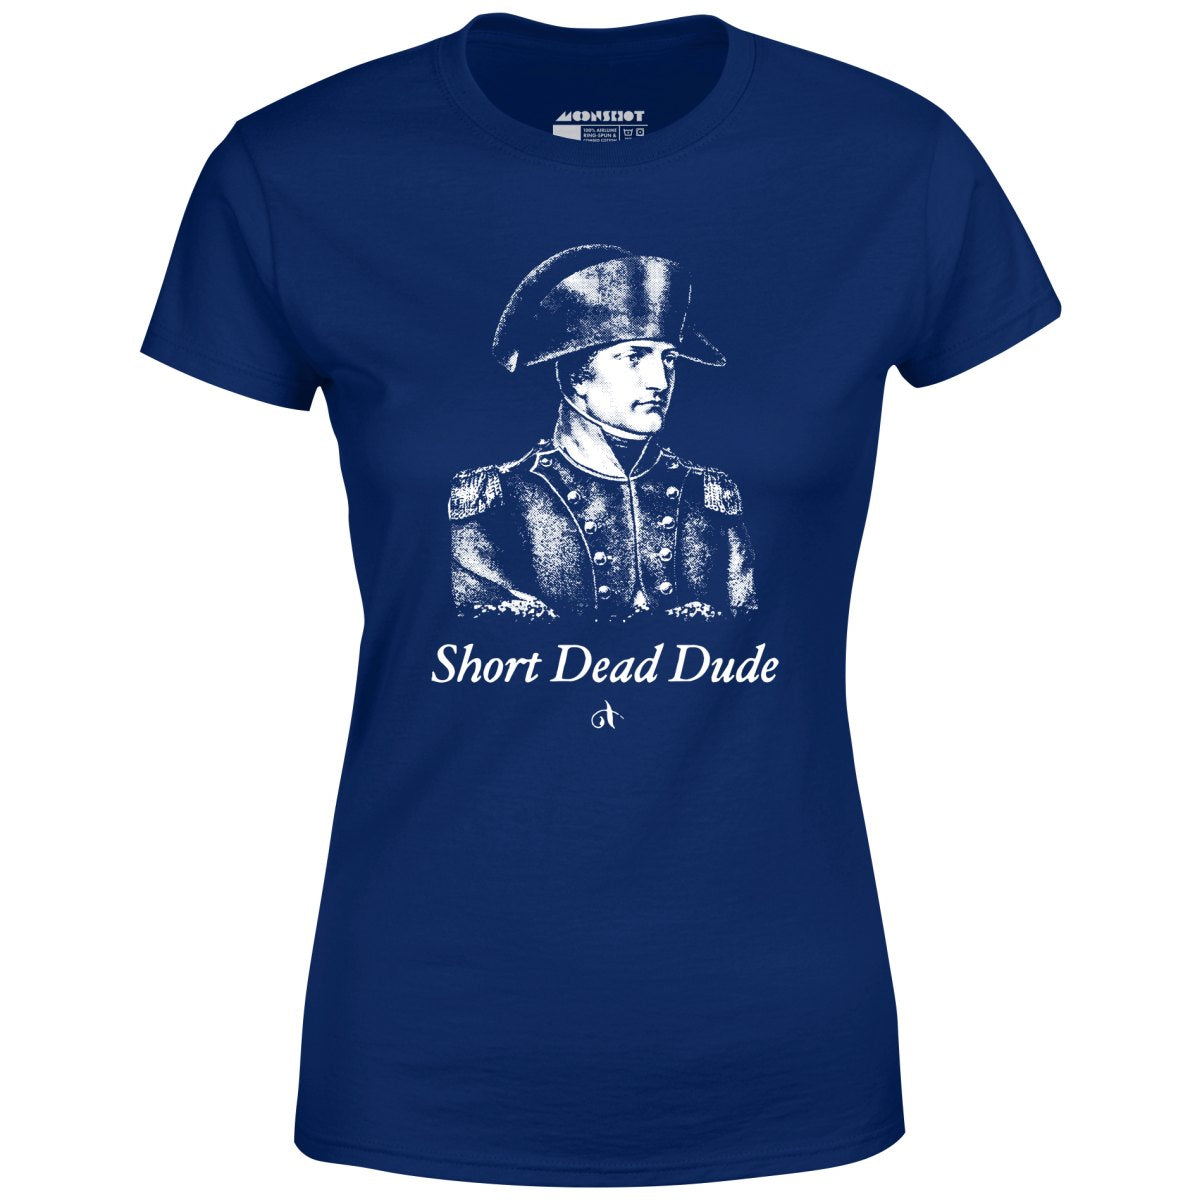 Napoleon - Short Dead Dude - Women's T-Shirt